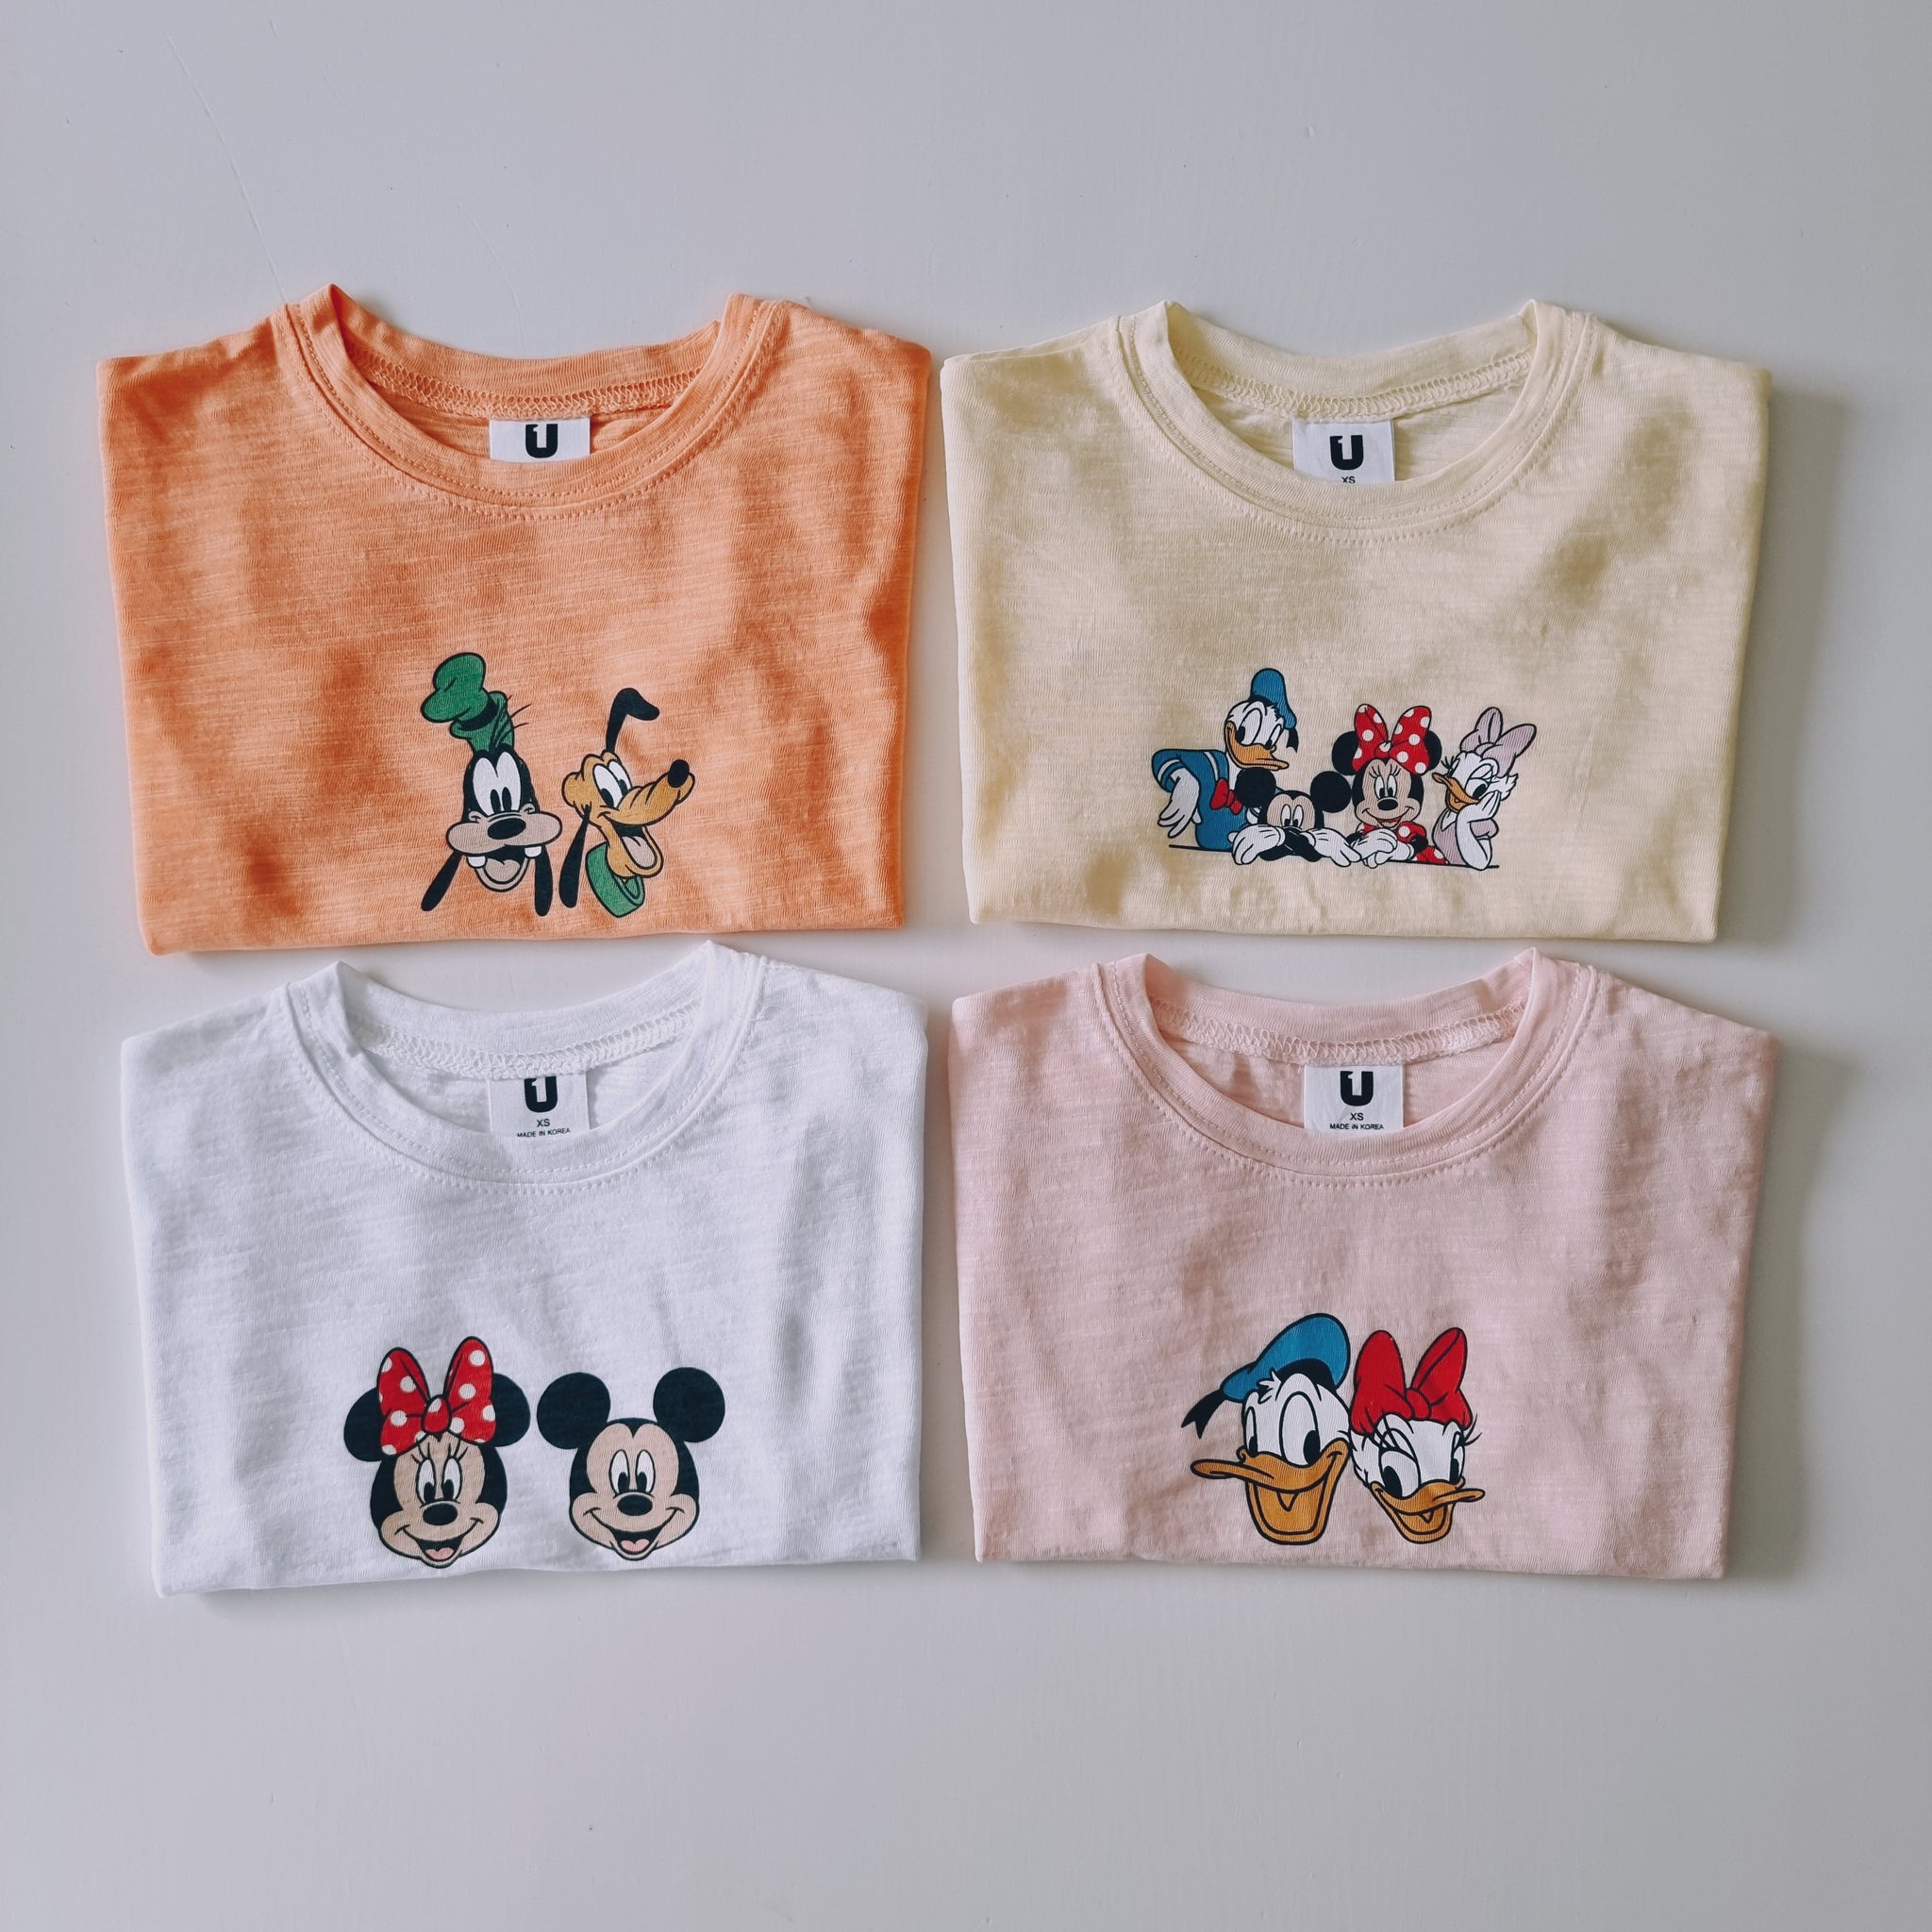 Explore Disney Magic with Our Disney Friends T-Shirts